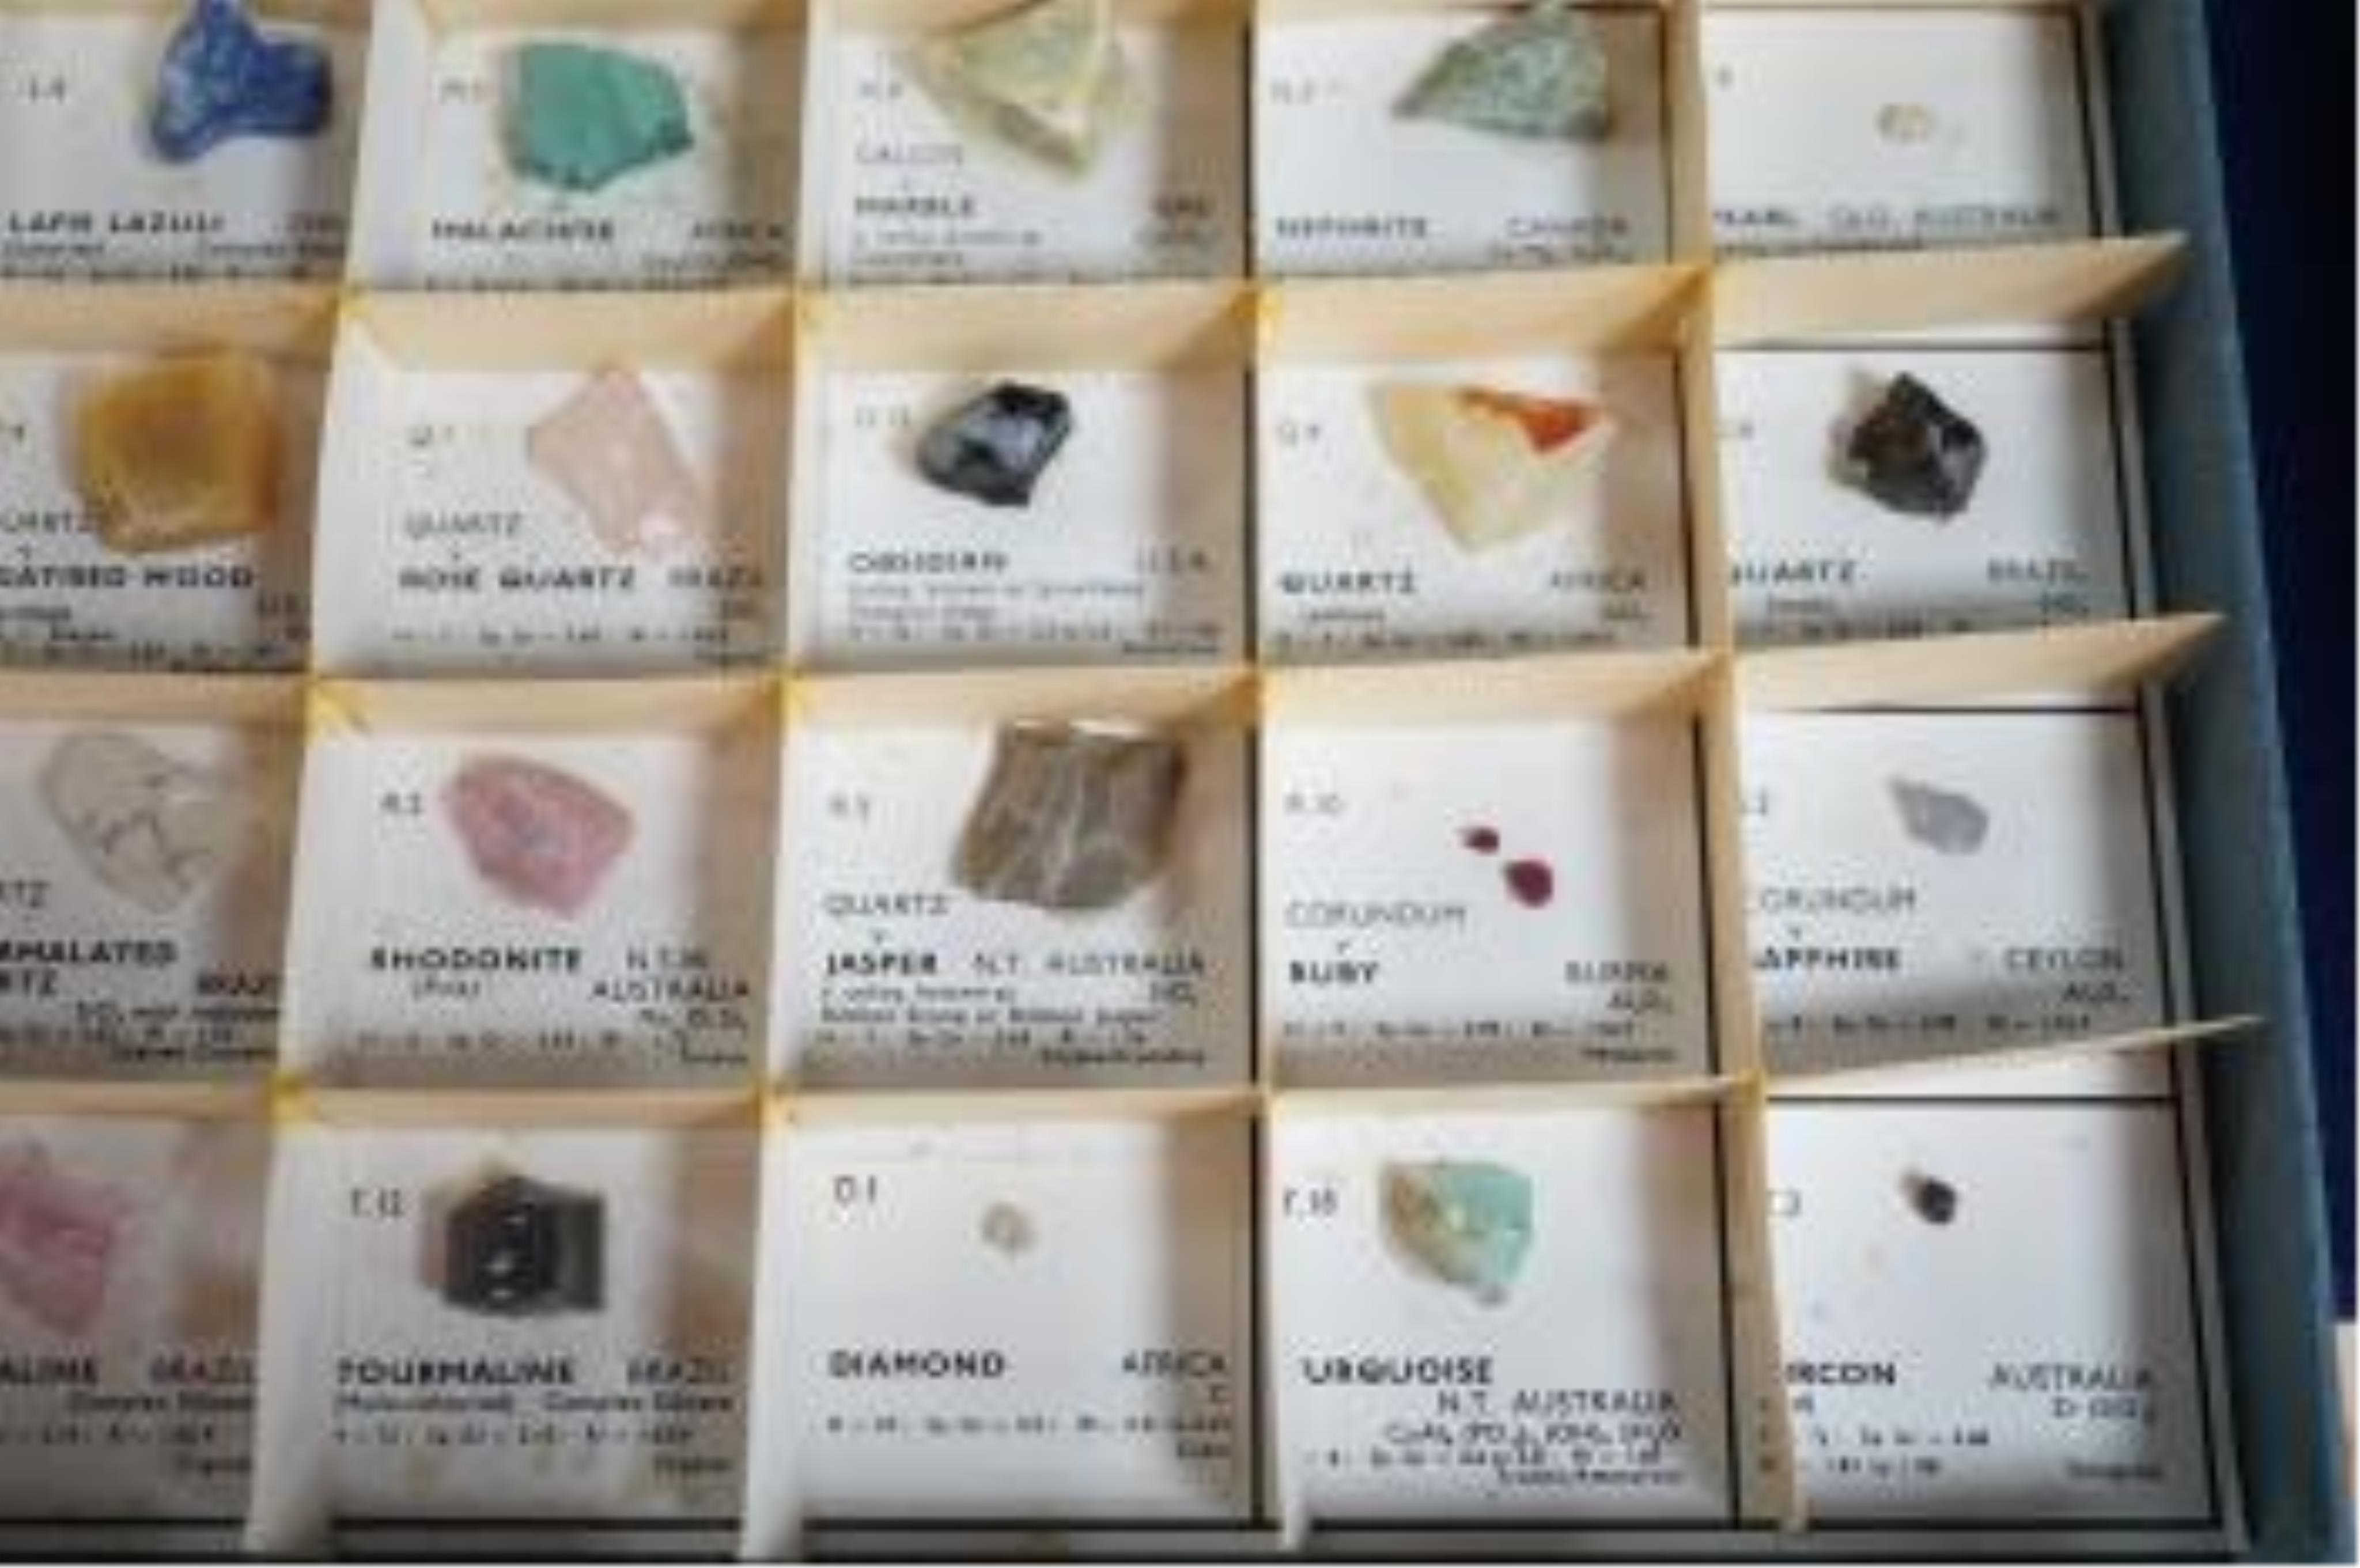 Three boxes containing unmounted cut gemstones including topaz, citrine, peridot, zircon, moonstone, etc. Fair condition.